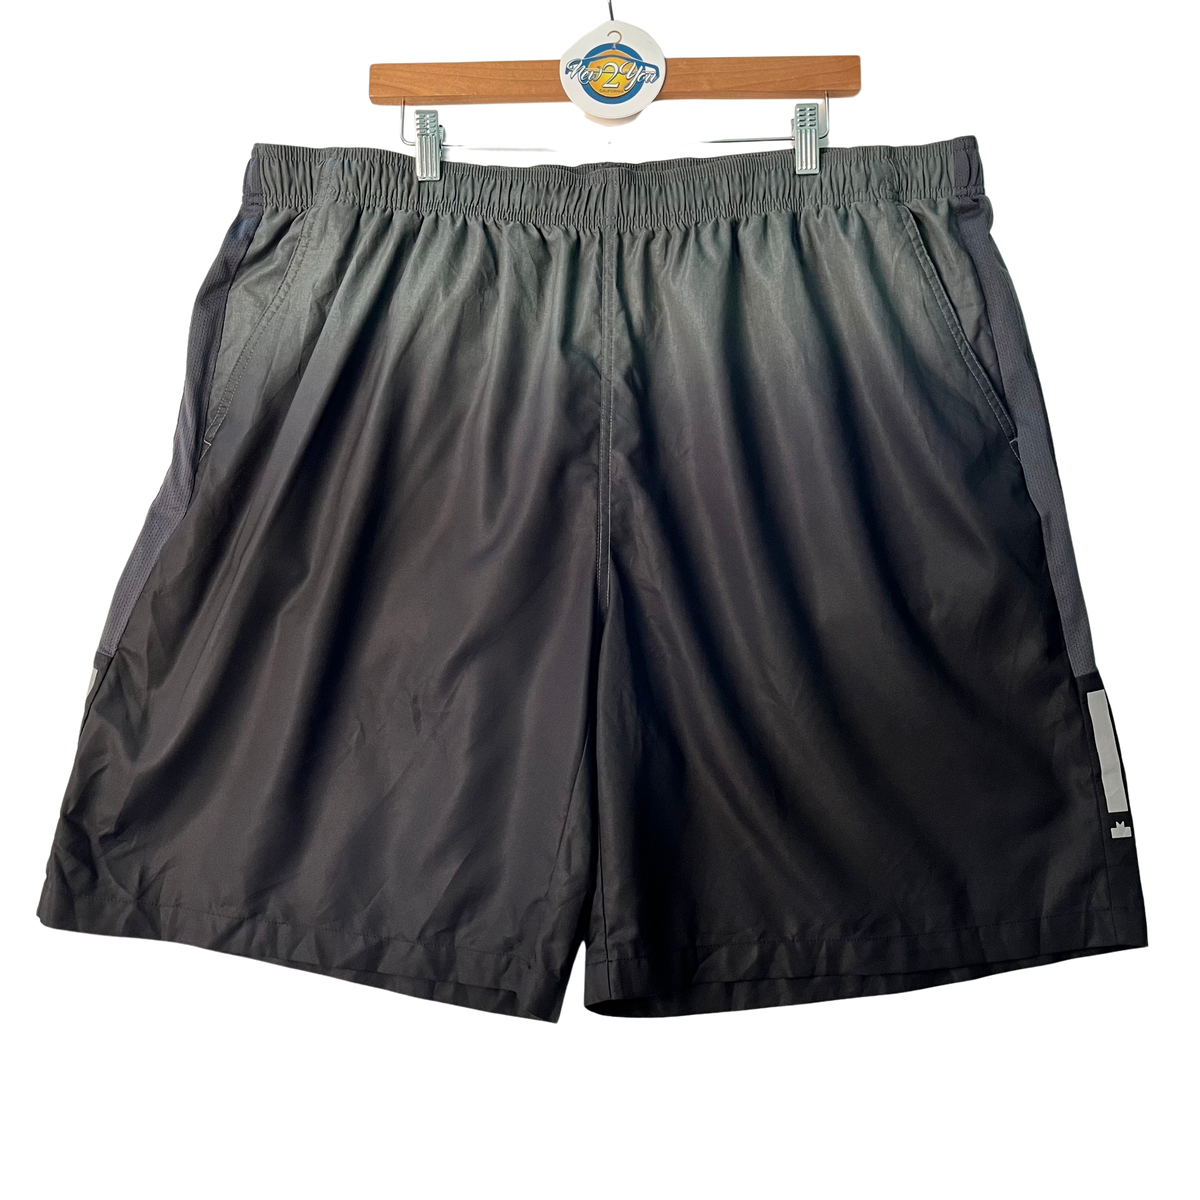 Grey & Black Ombre Basketball Shorts (MSX)